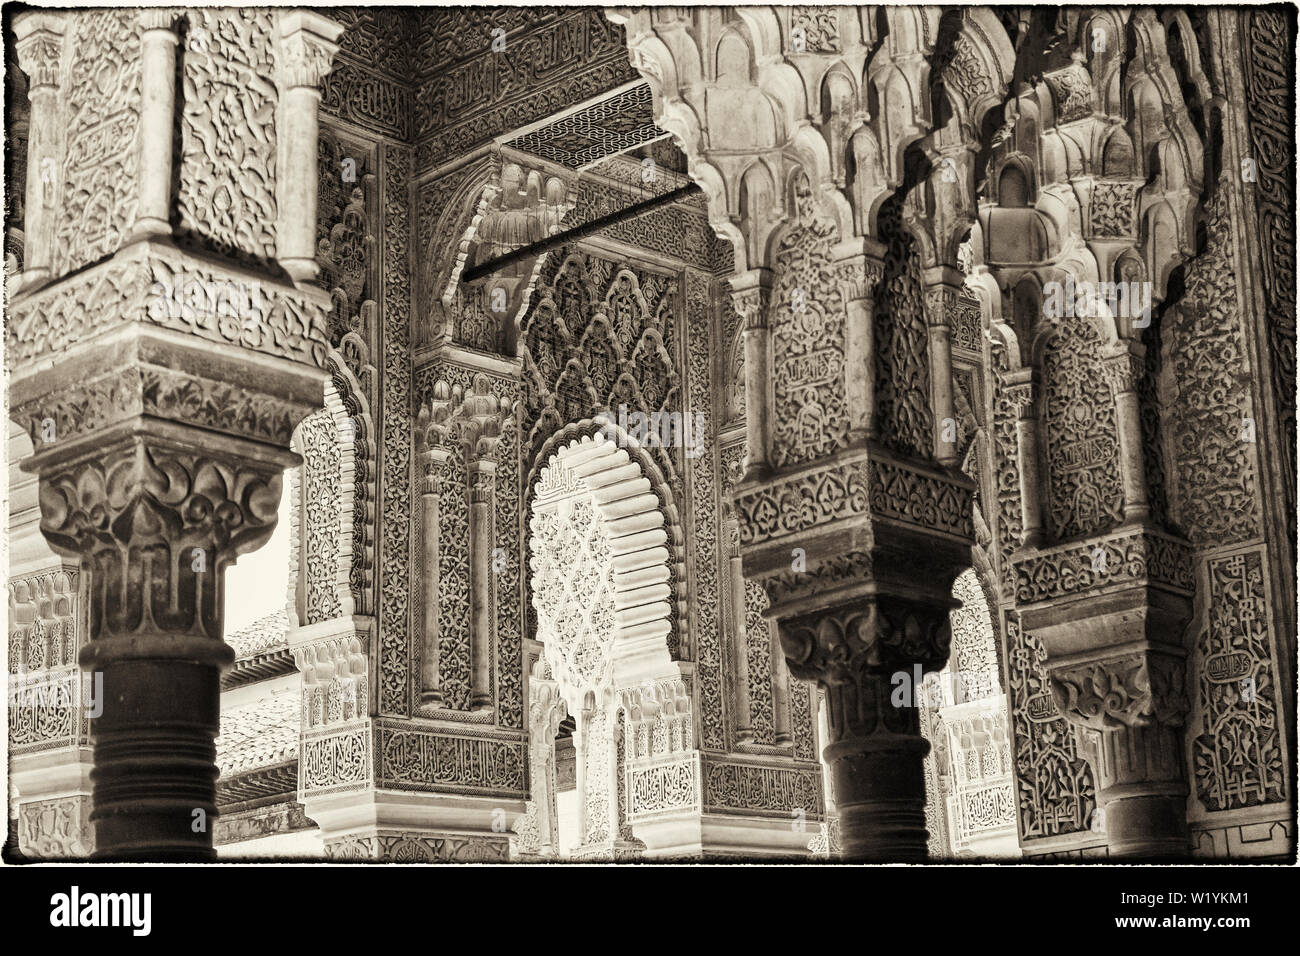 Decorated columns and arches in the Alhambra, Granada, Granada Province, Andalusia, southern Spain.  The Alhambra, Generalife and Albayzin are designa Stock Photo